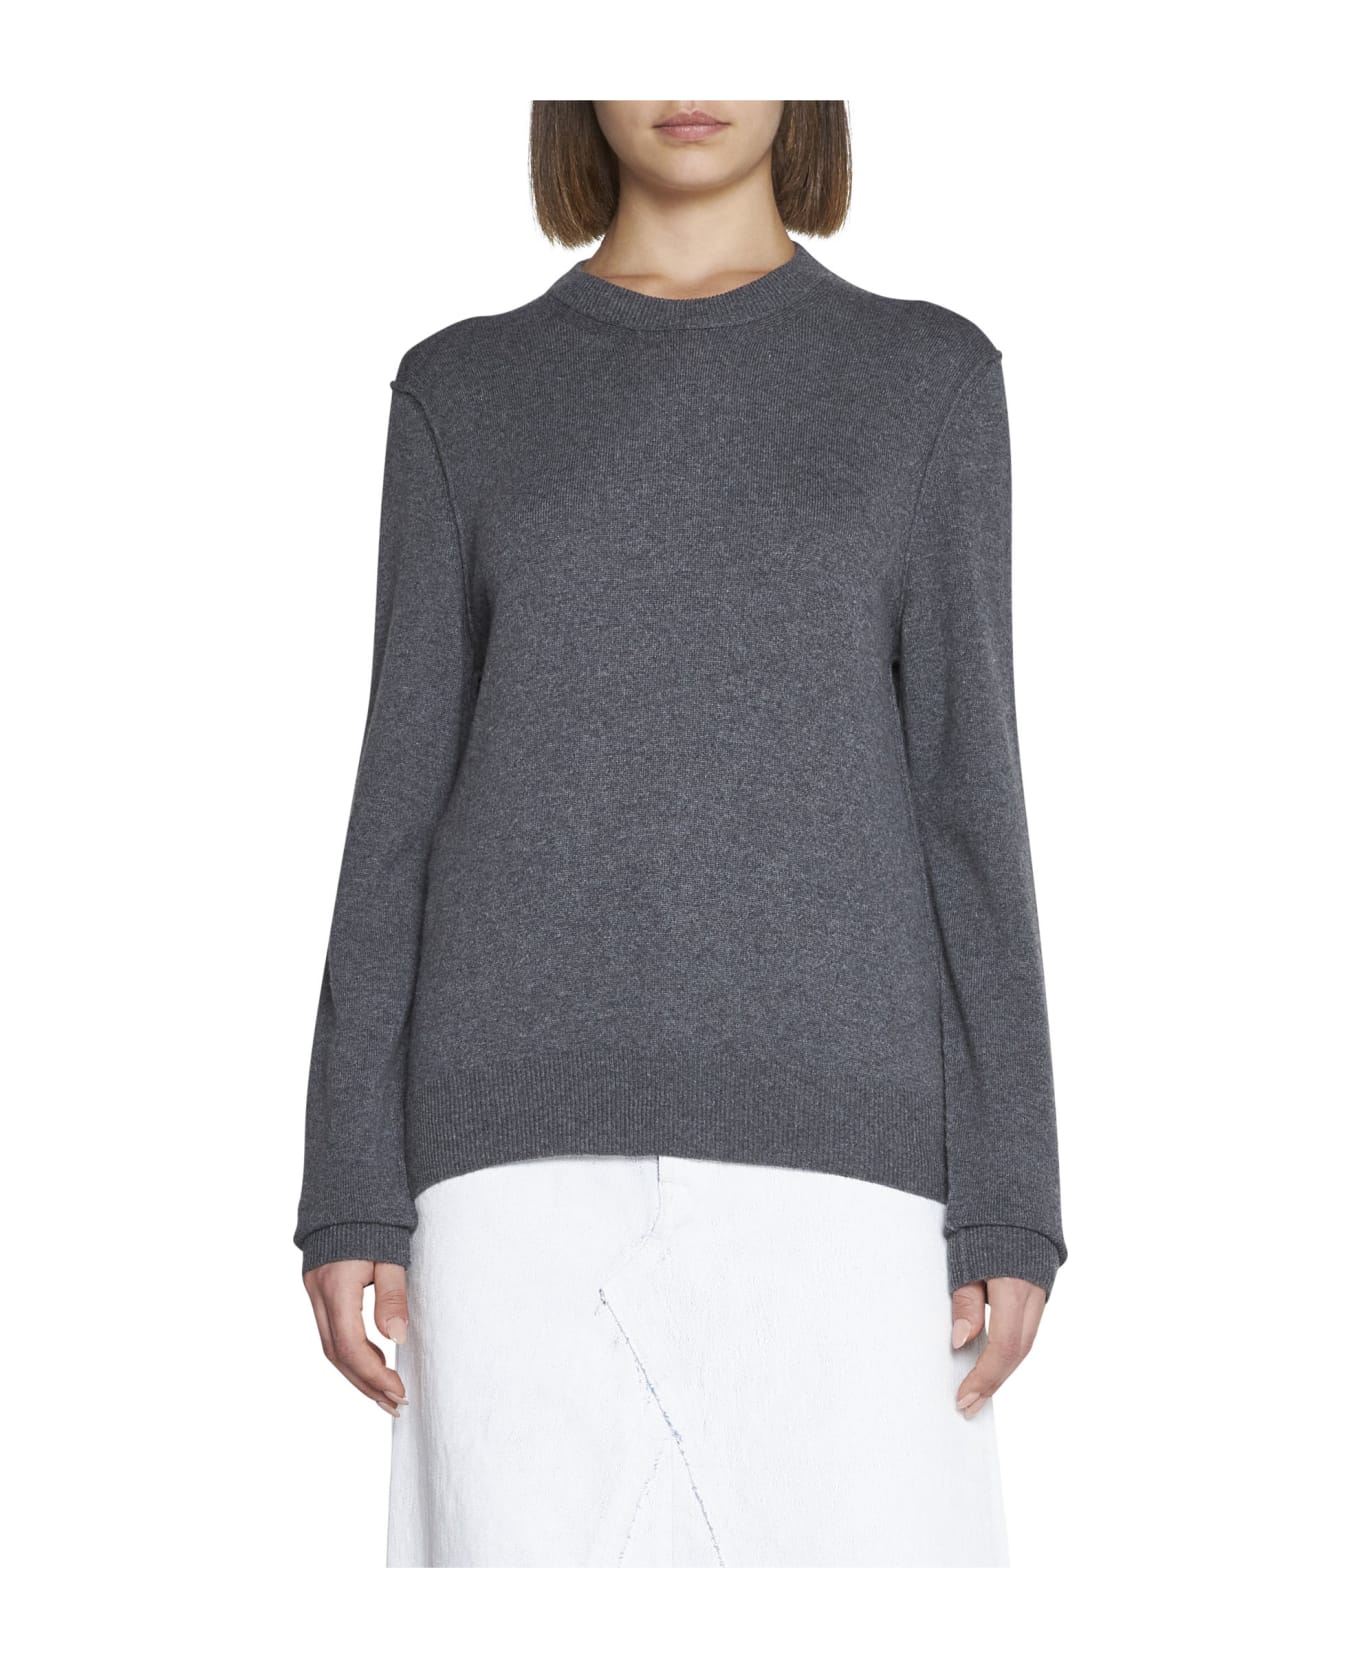 Maison Margiela Sweater - Medium grey